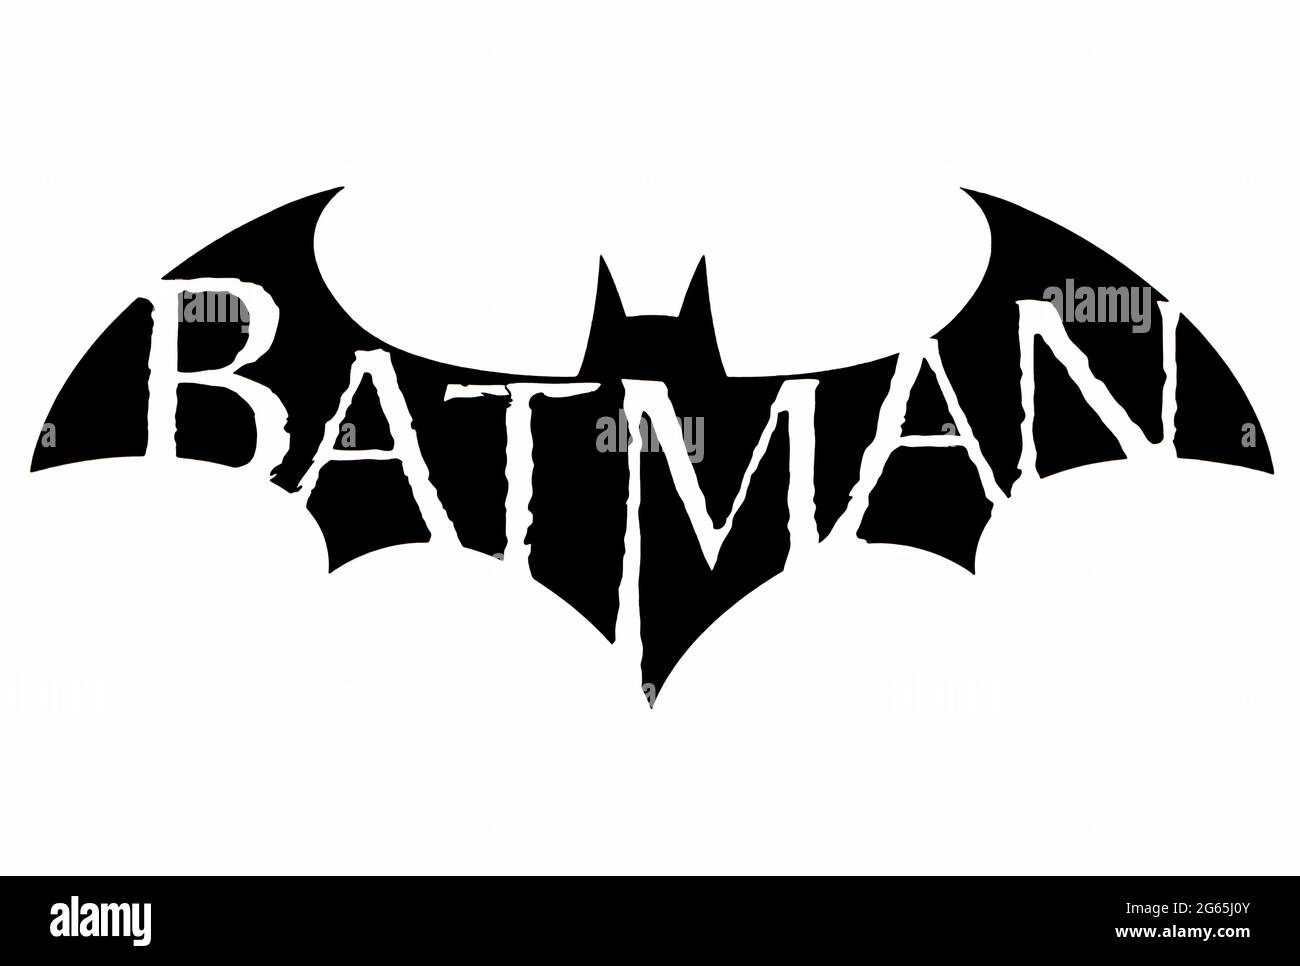 Batman Cut Out Stock Images & Pictures - Alamy